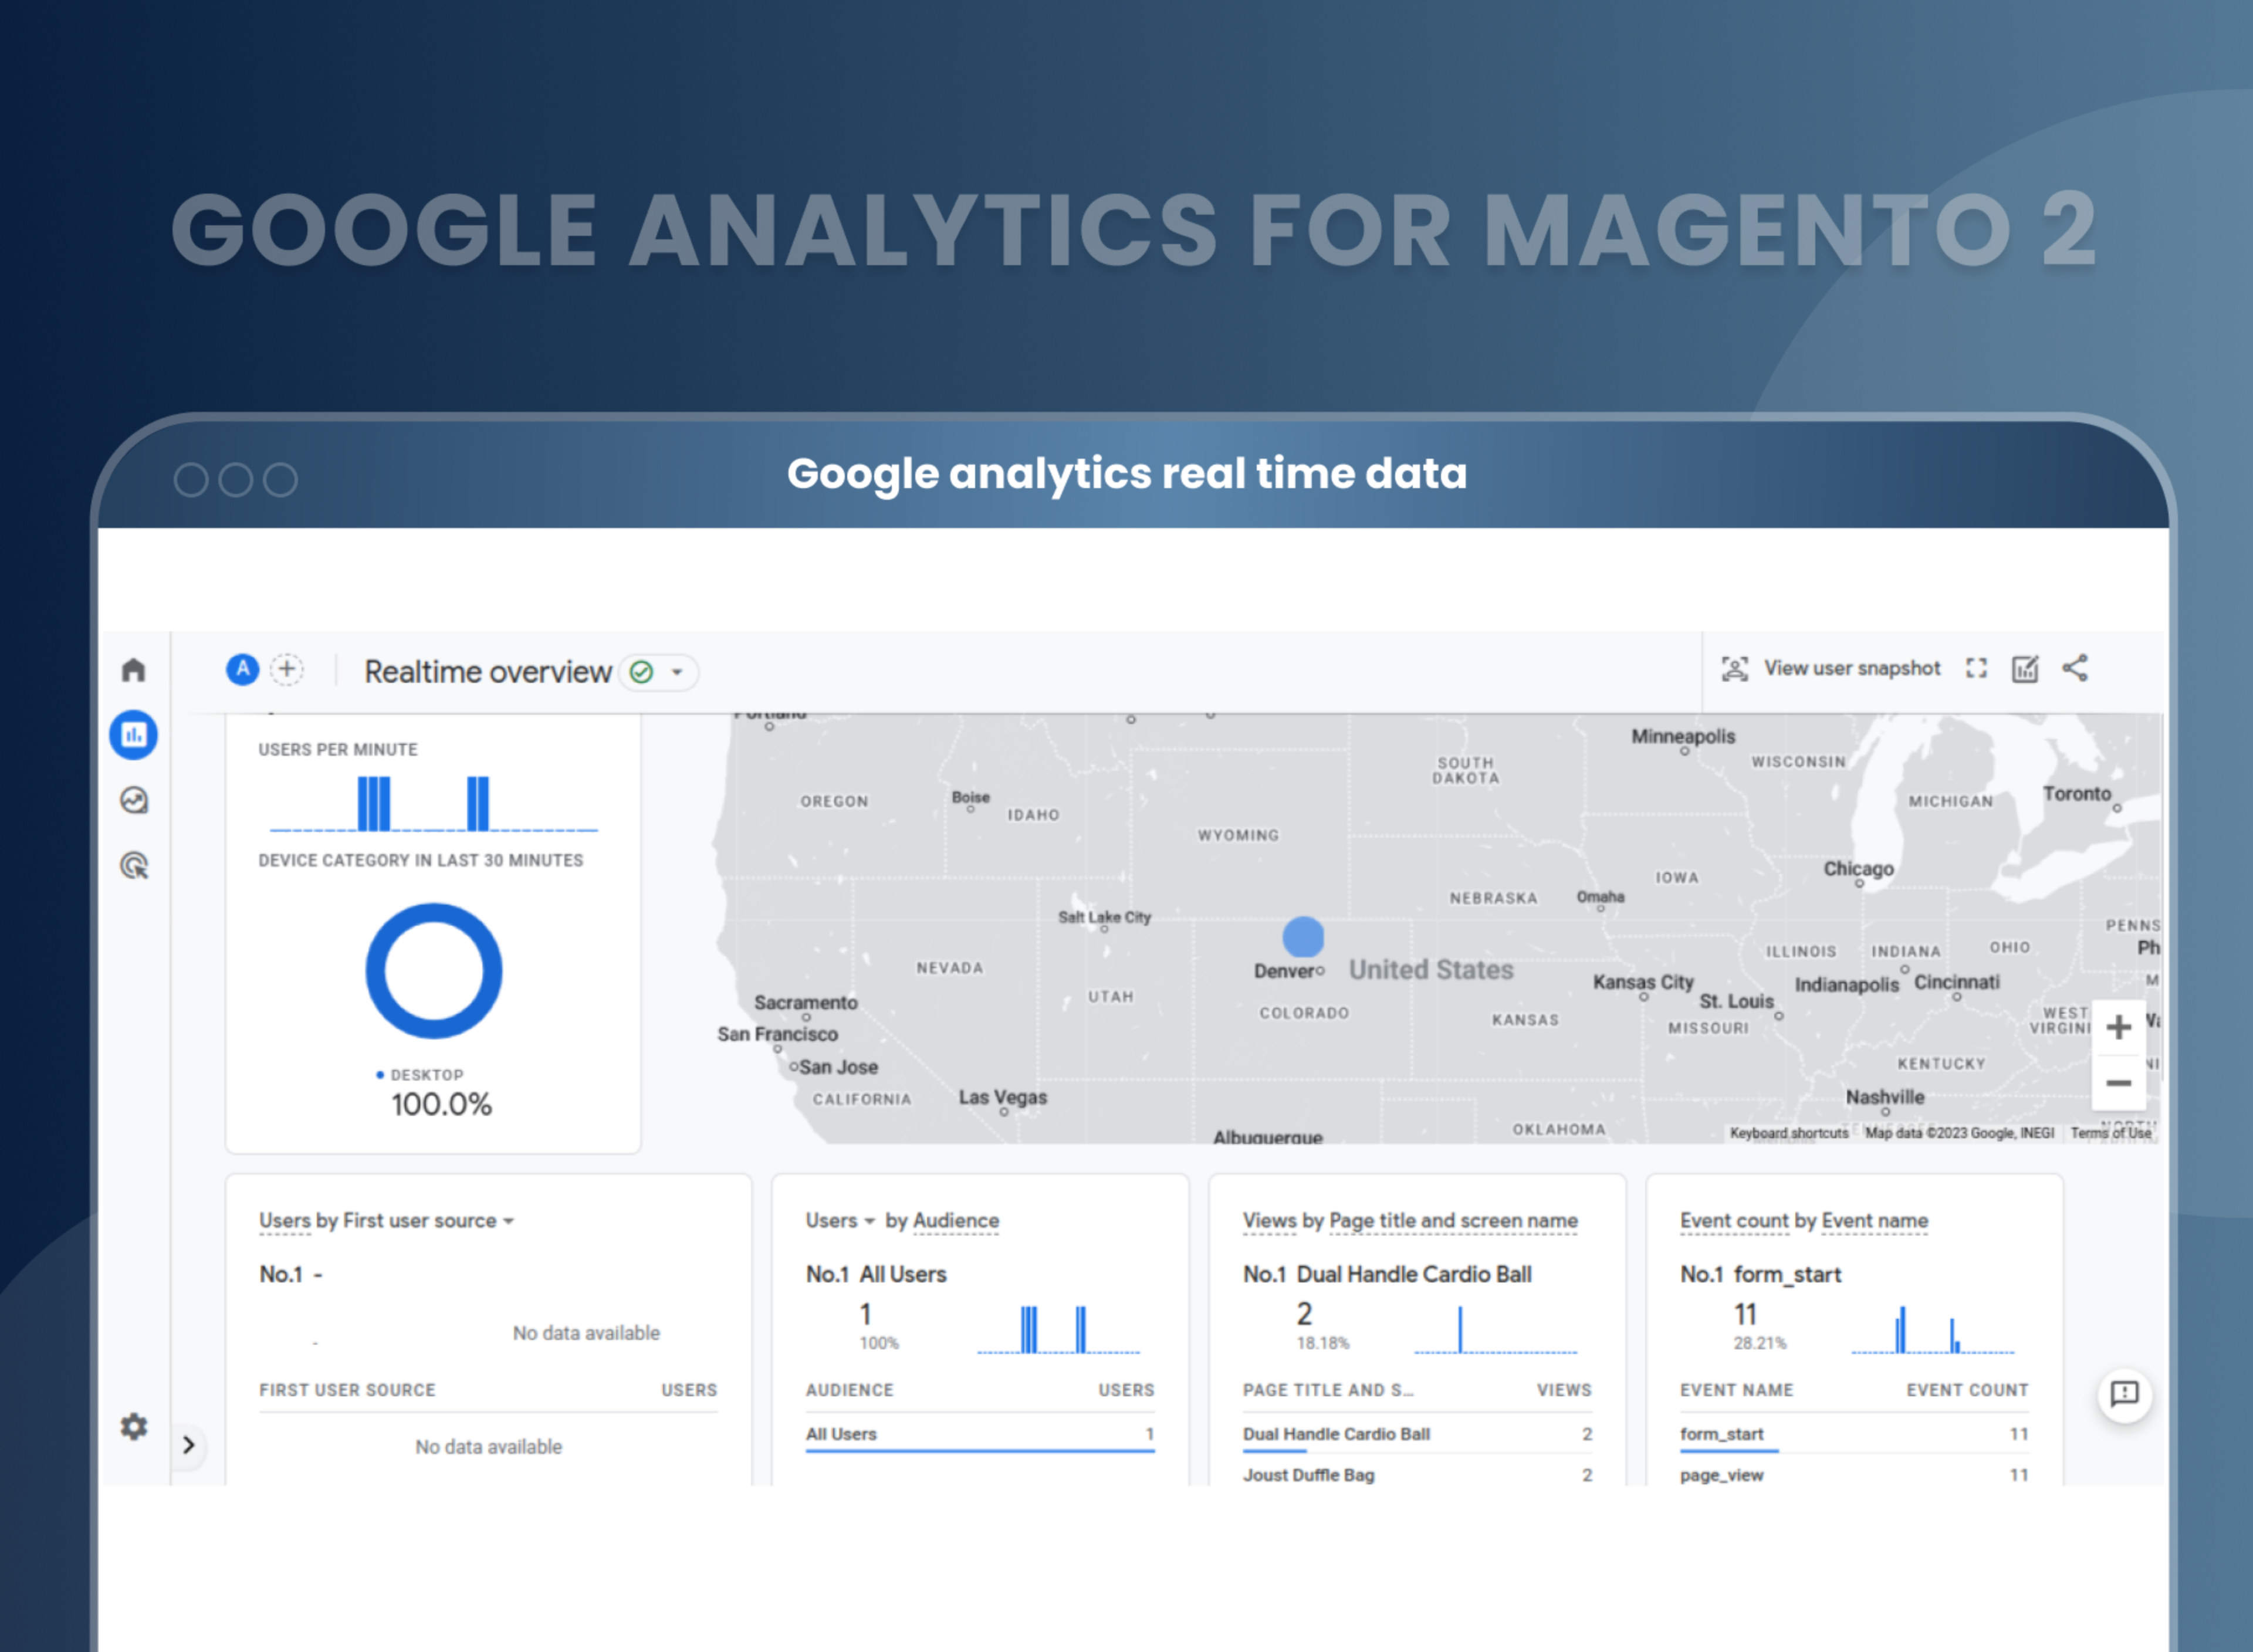 Google analytics real time data